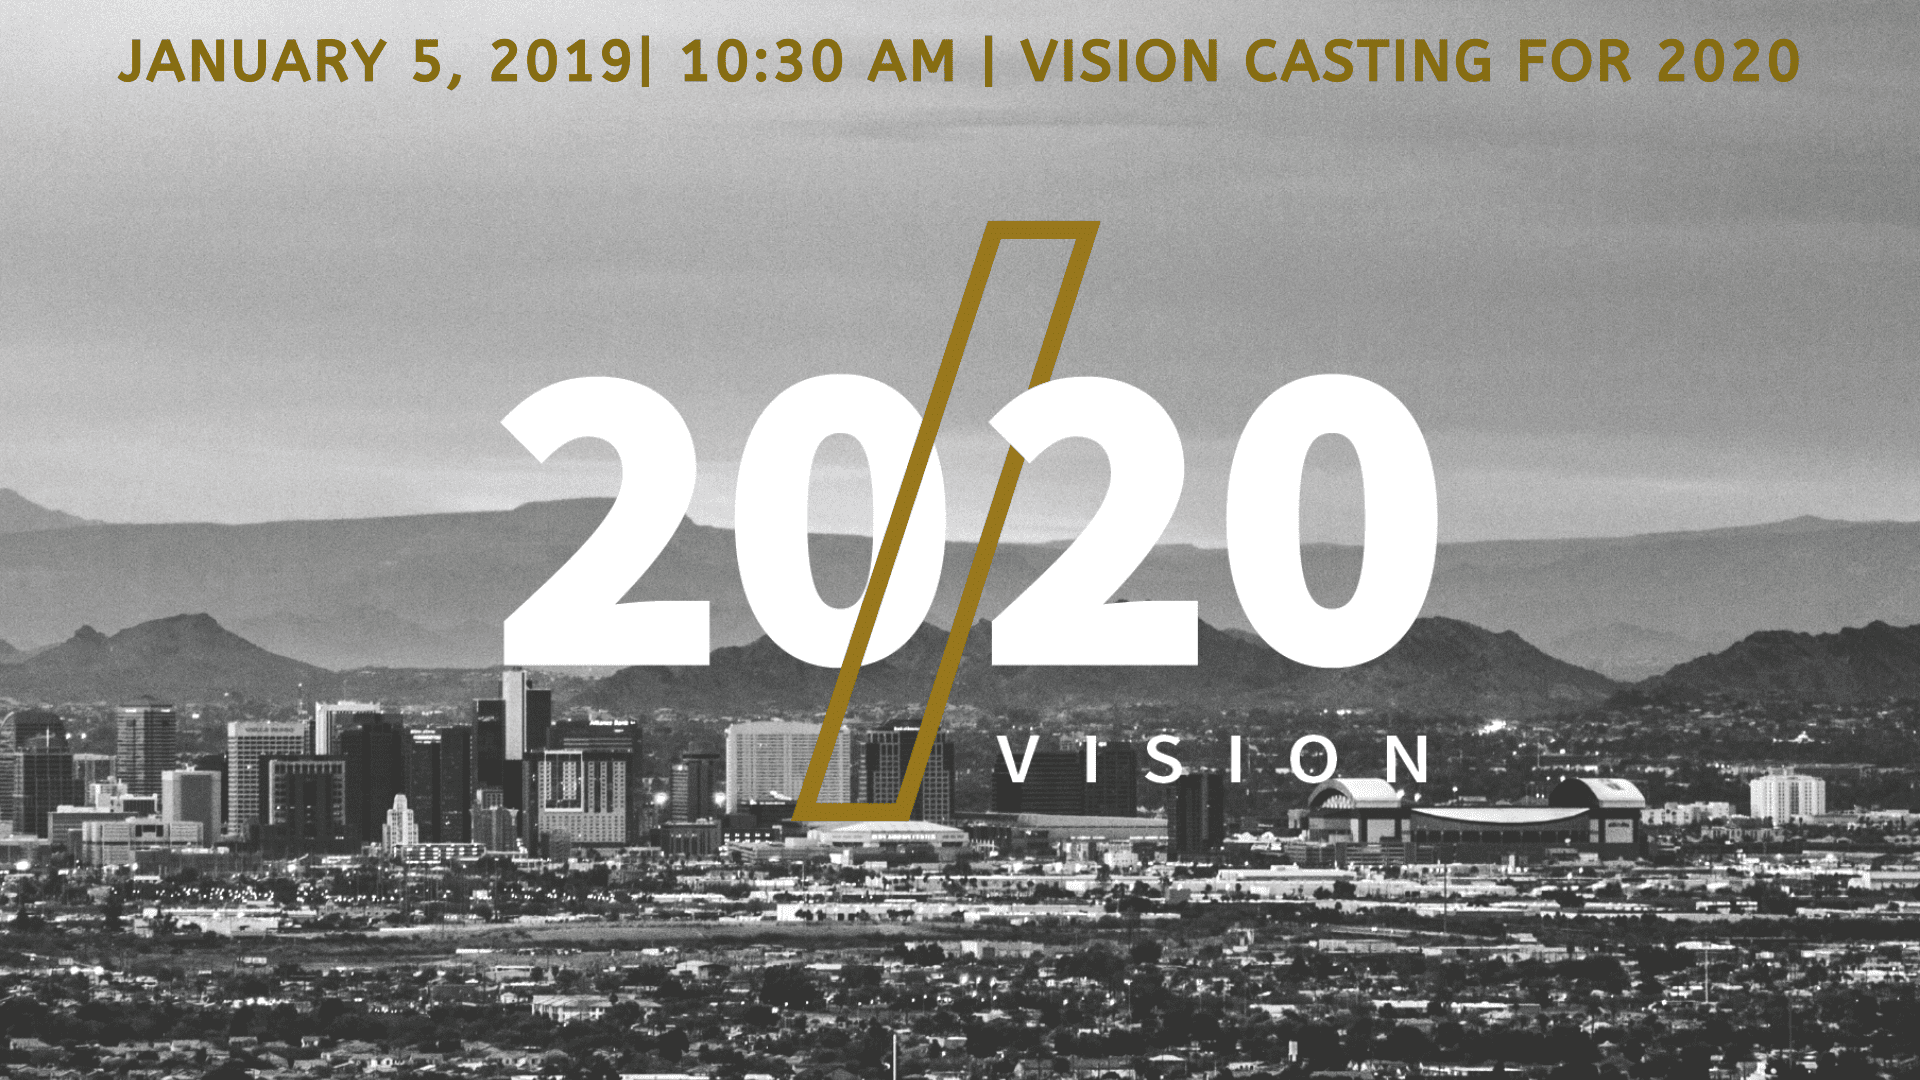 Refocus Vision 20/20 – Fellowship